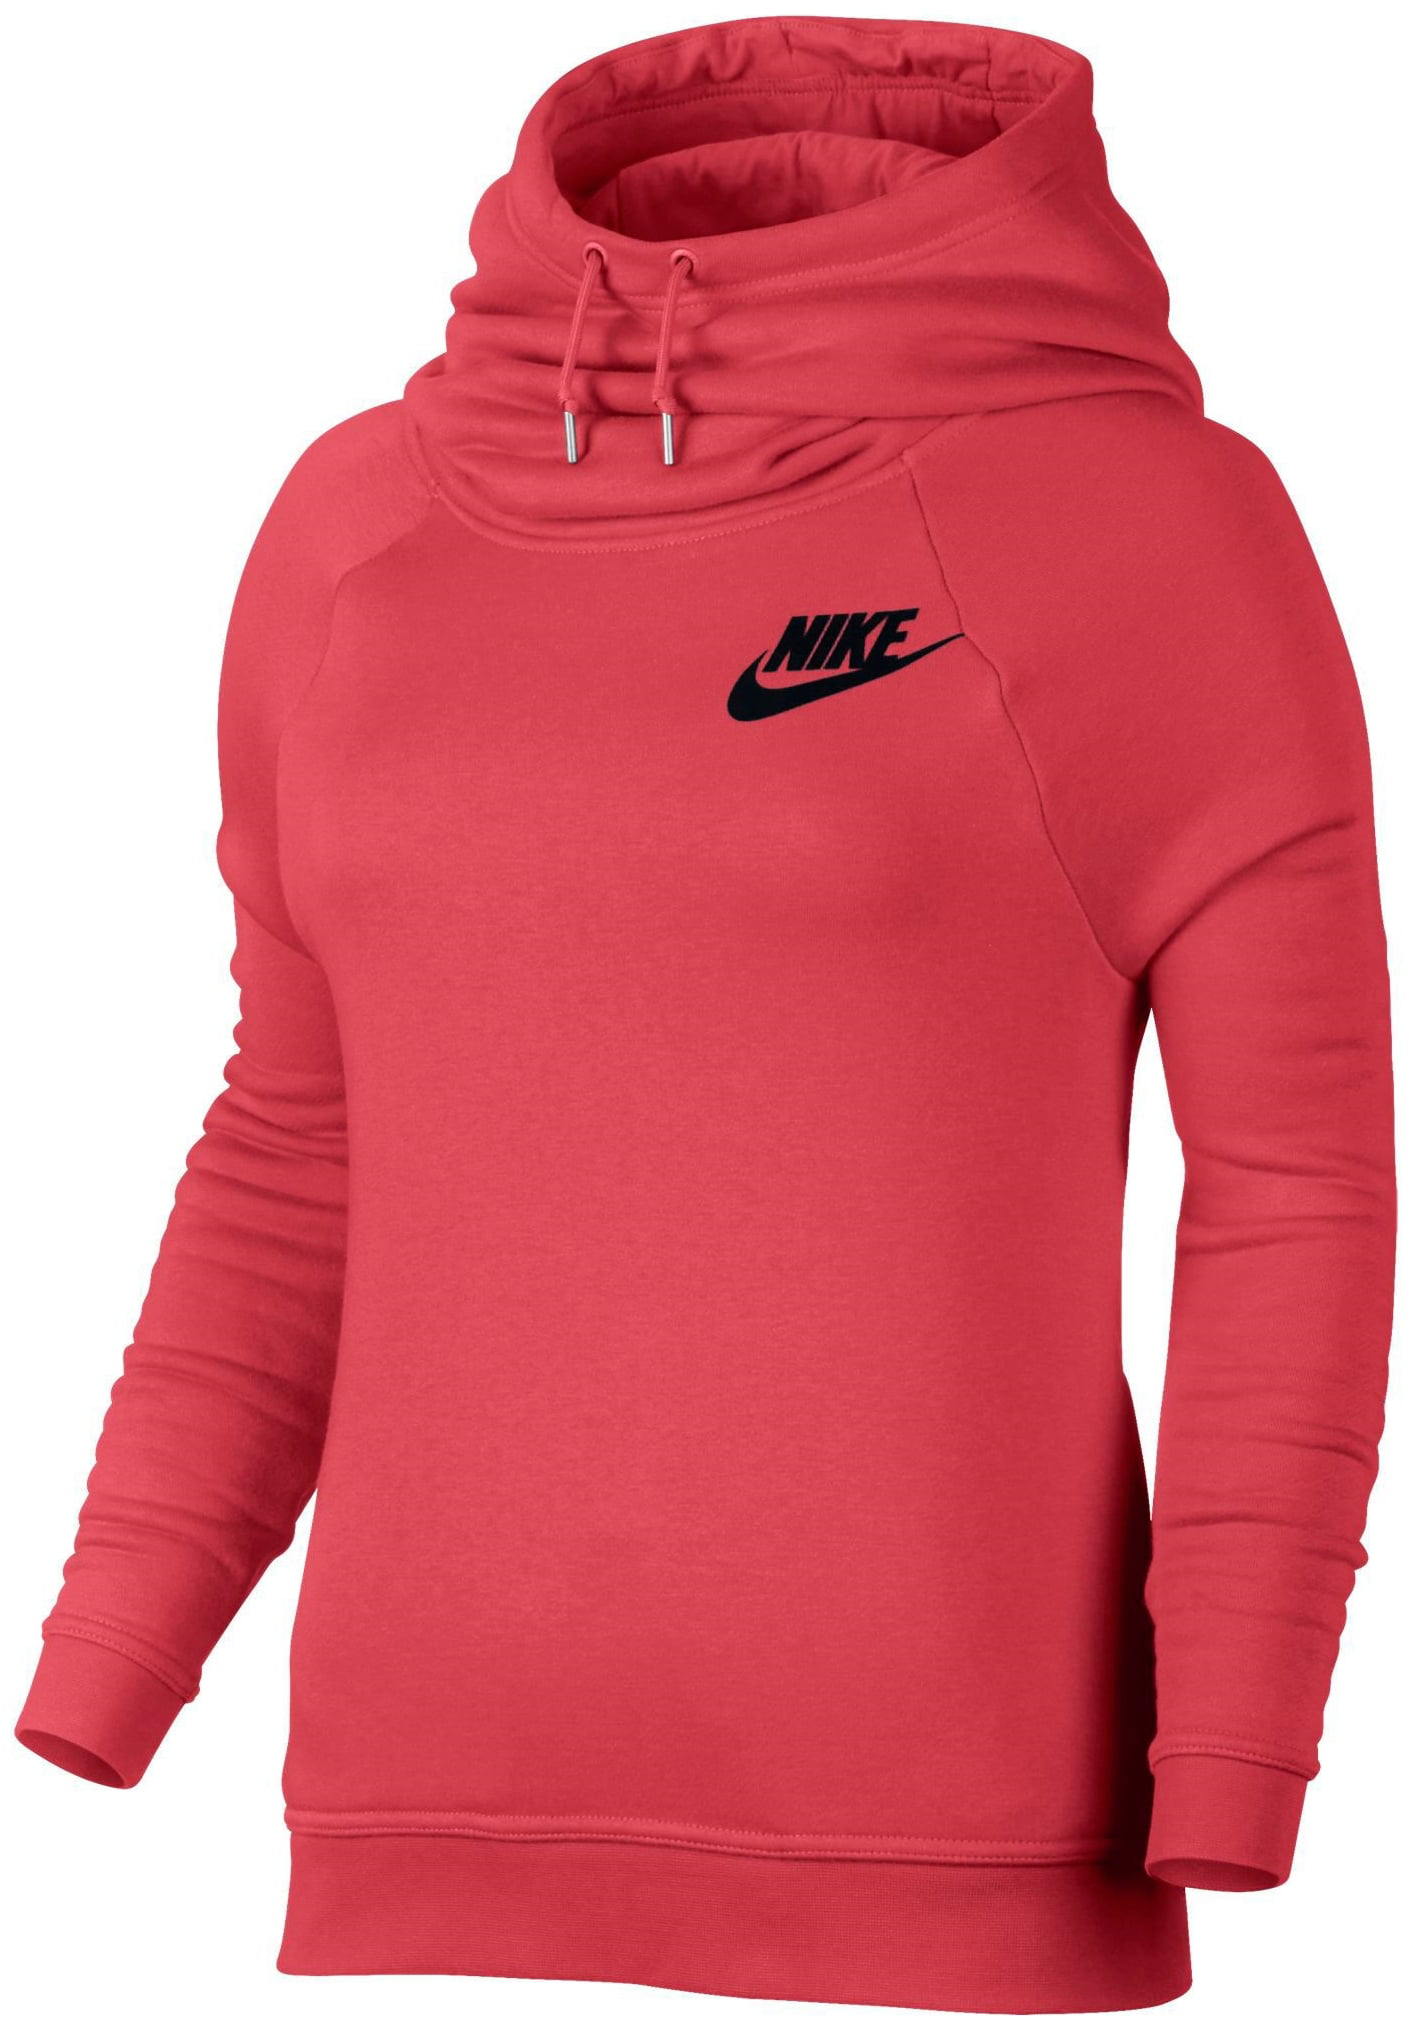 Nike Women's Sportswear Rally Hoodie - Ember Glow/Ember Glow - Size XL ...